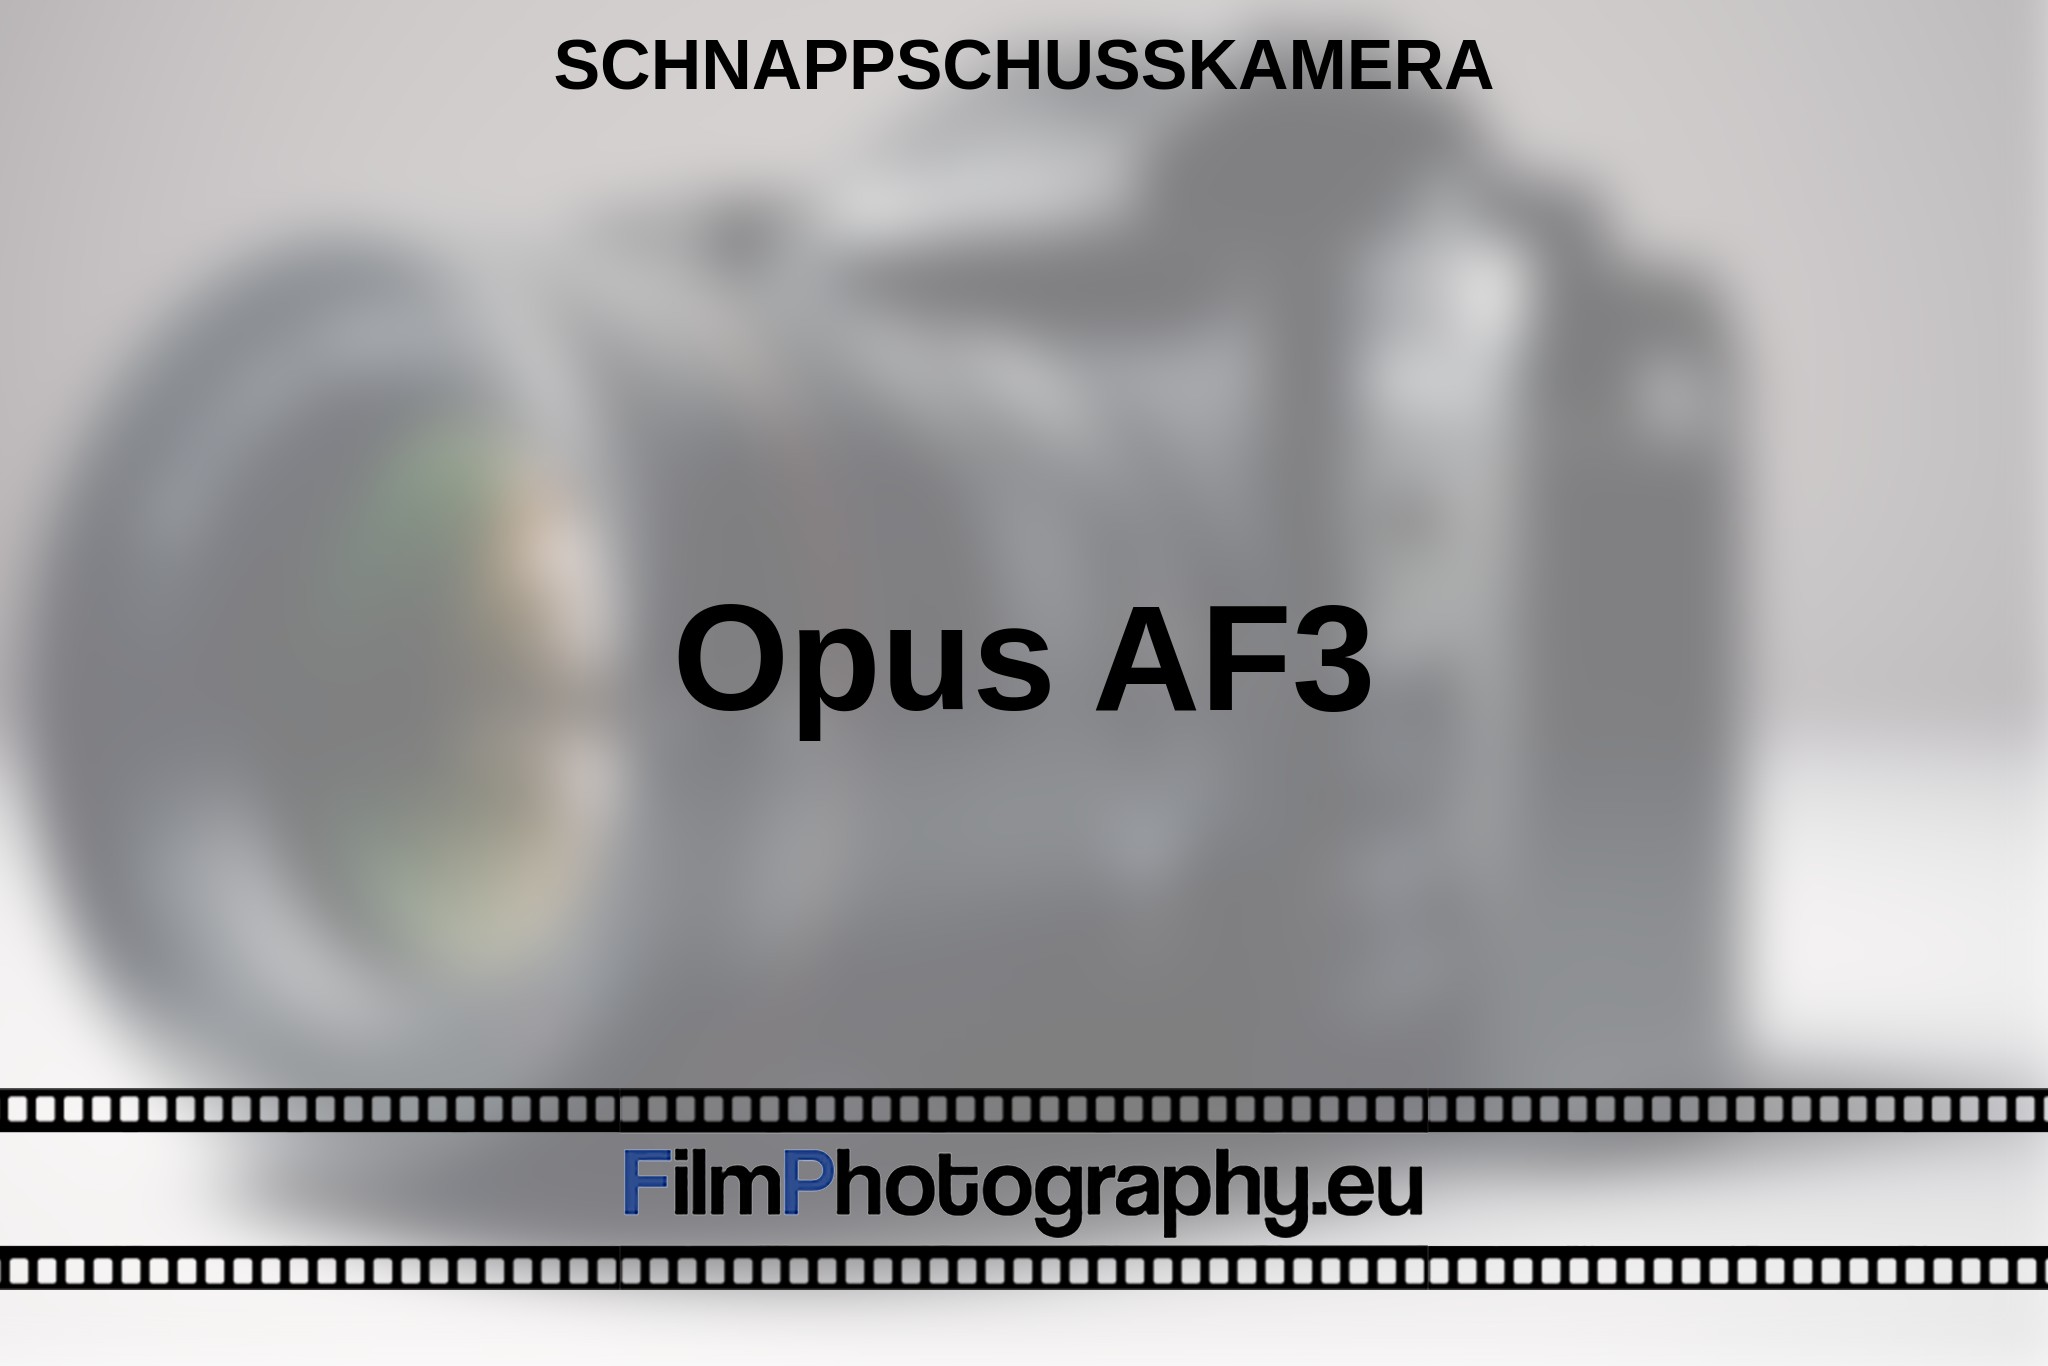 opus-af3-schnappschusskamera-bnv.jpg